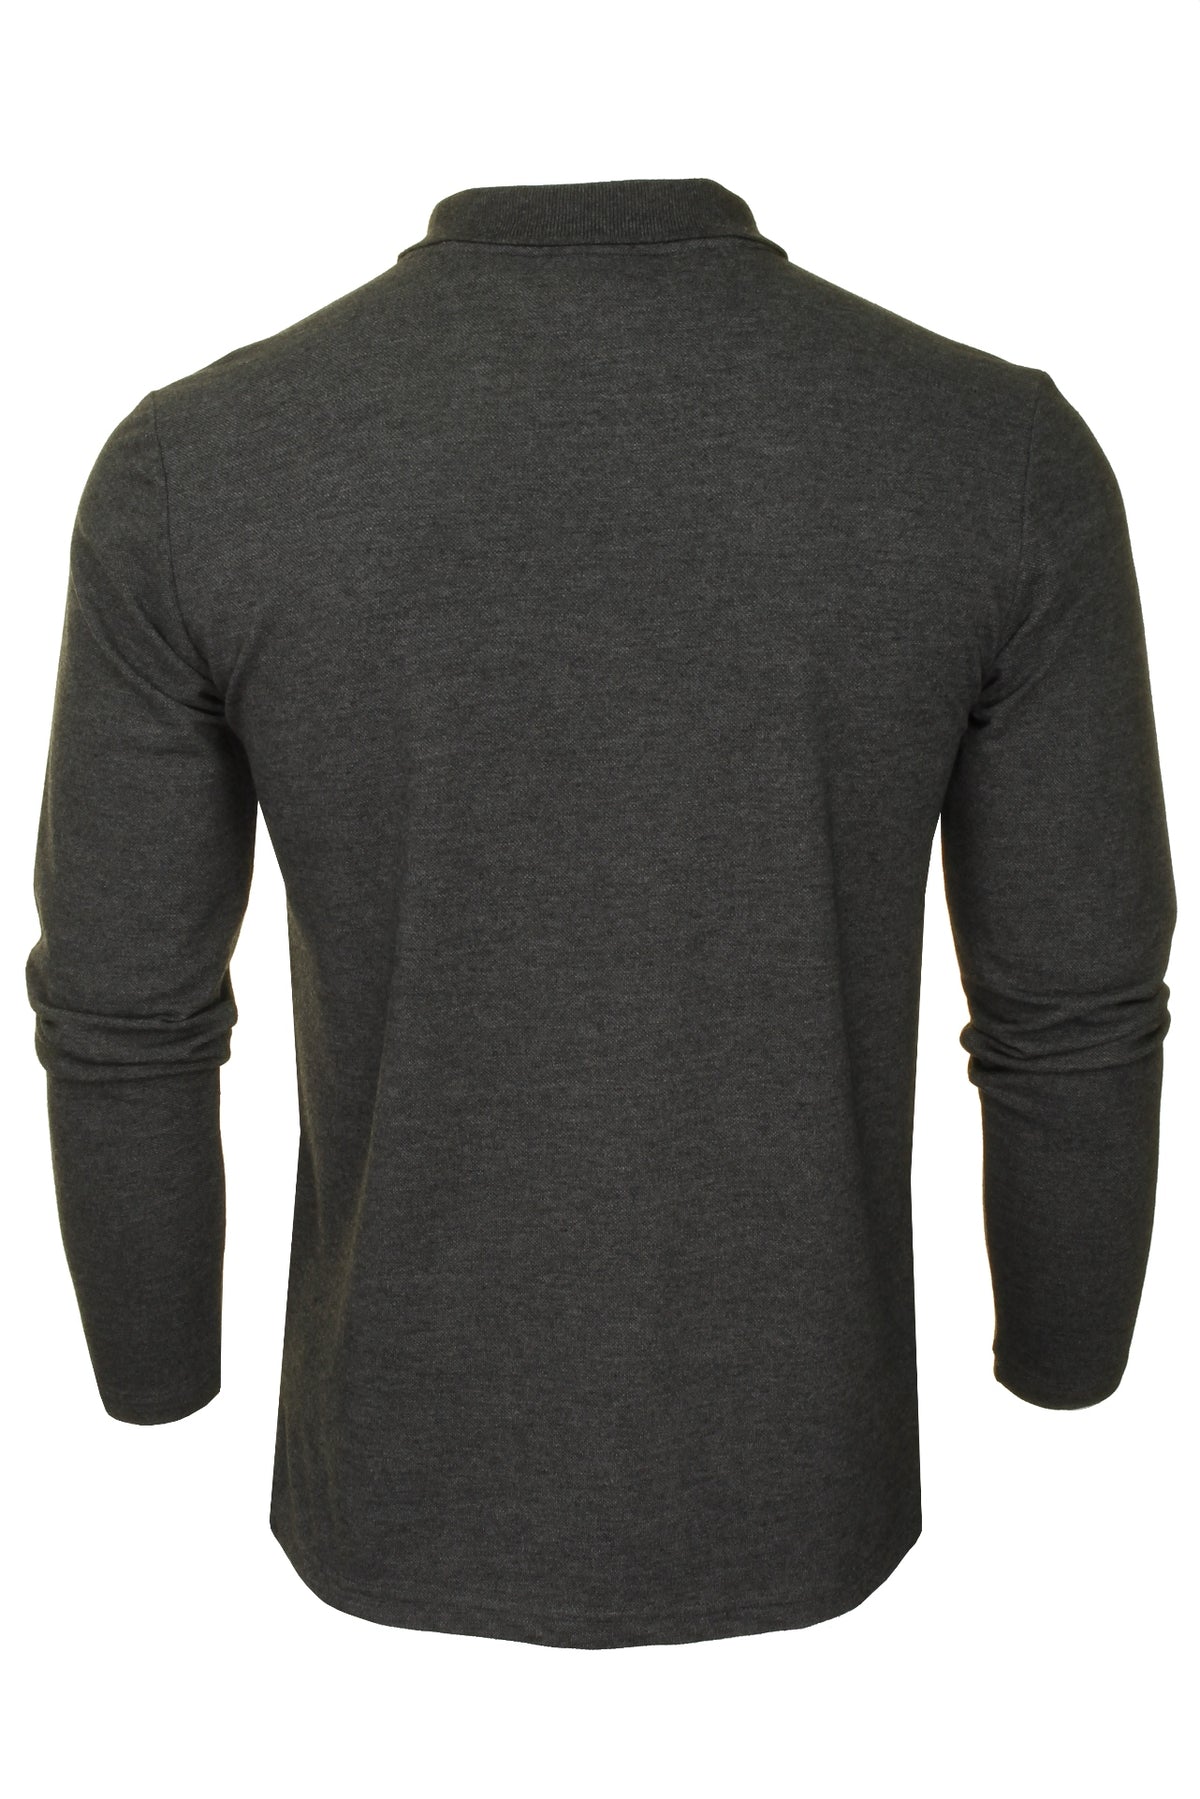 Xact Mens Polo T-Shirt Pique Long Sleeved, 03, XP1003, Charcoal